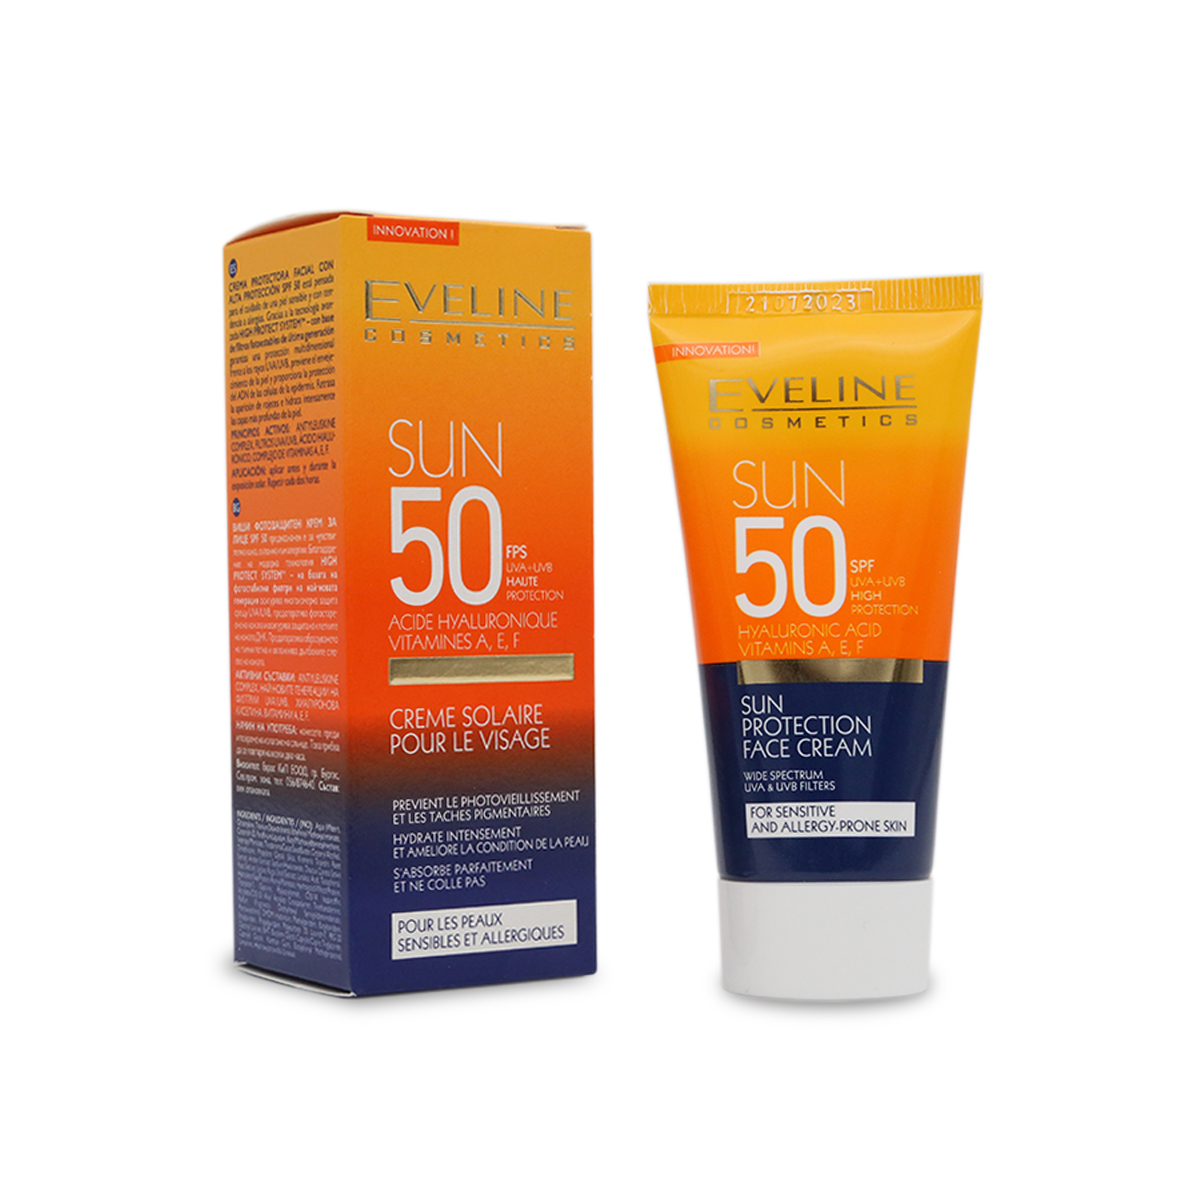 127-5907609330789-Eveline Cosmetics Sun Protection Face Cream SPF50 50ml-1